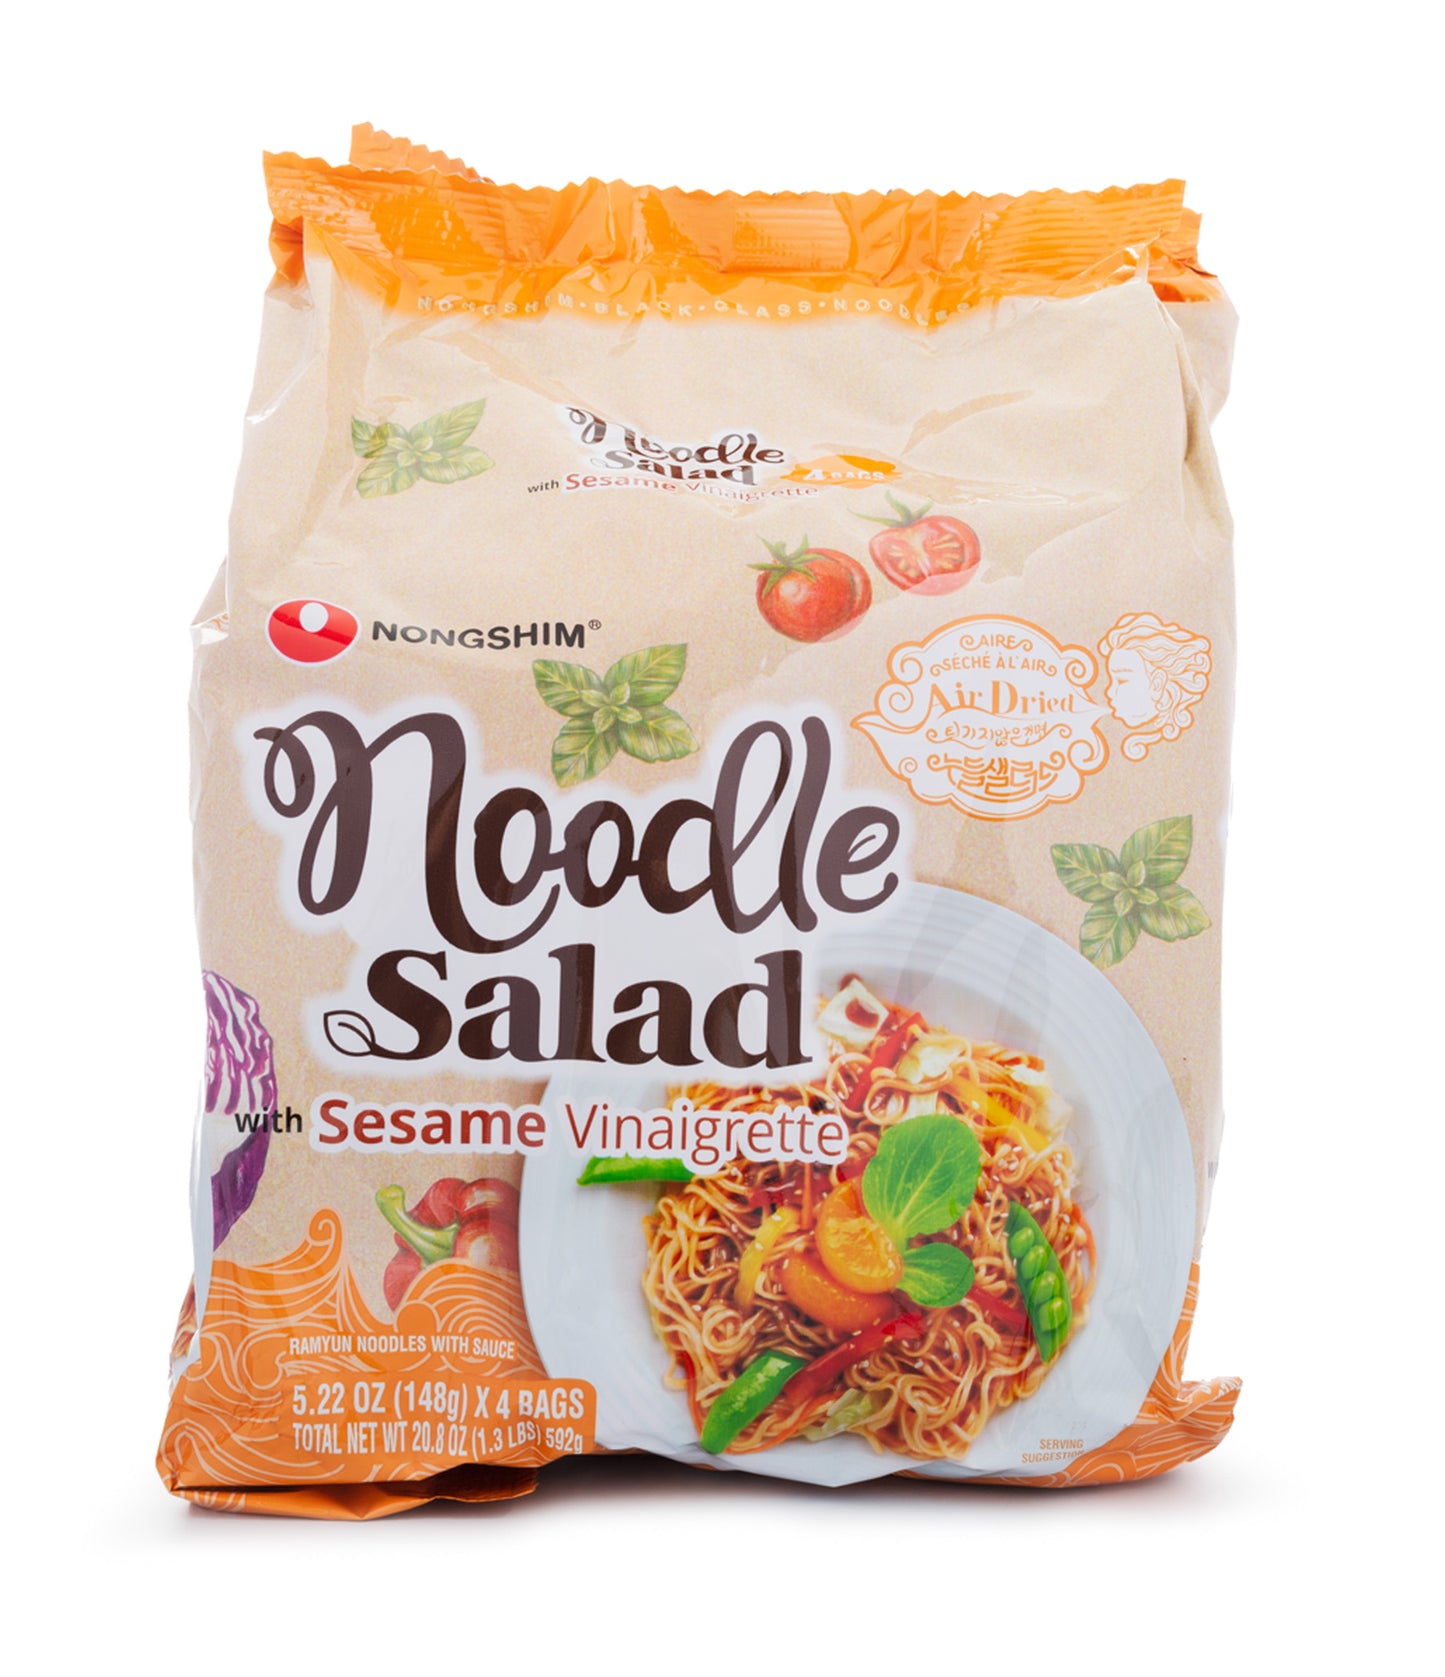 Nongshim Noodle Salad with Sesame Vinaigrette